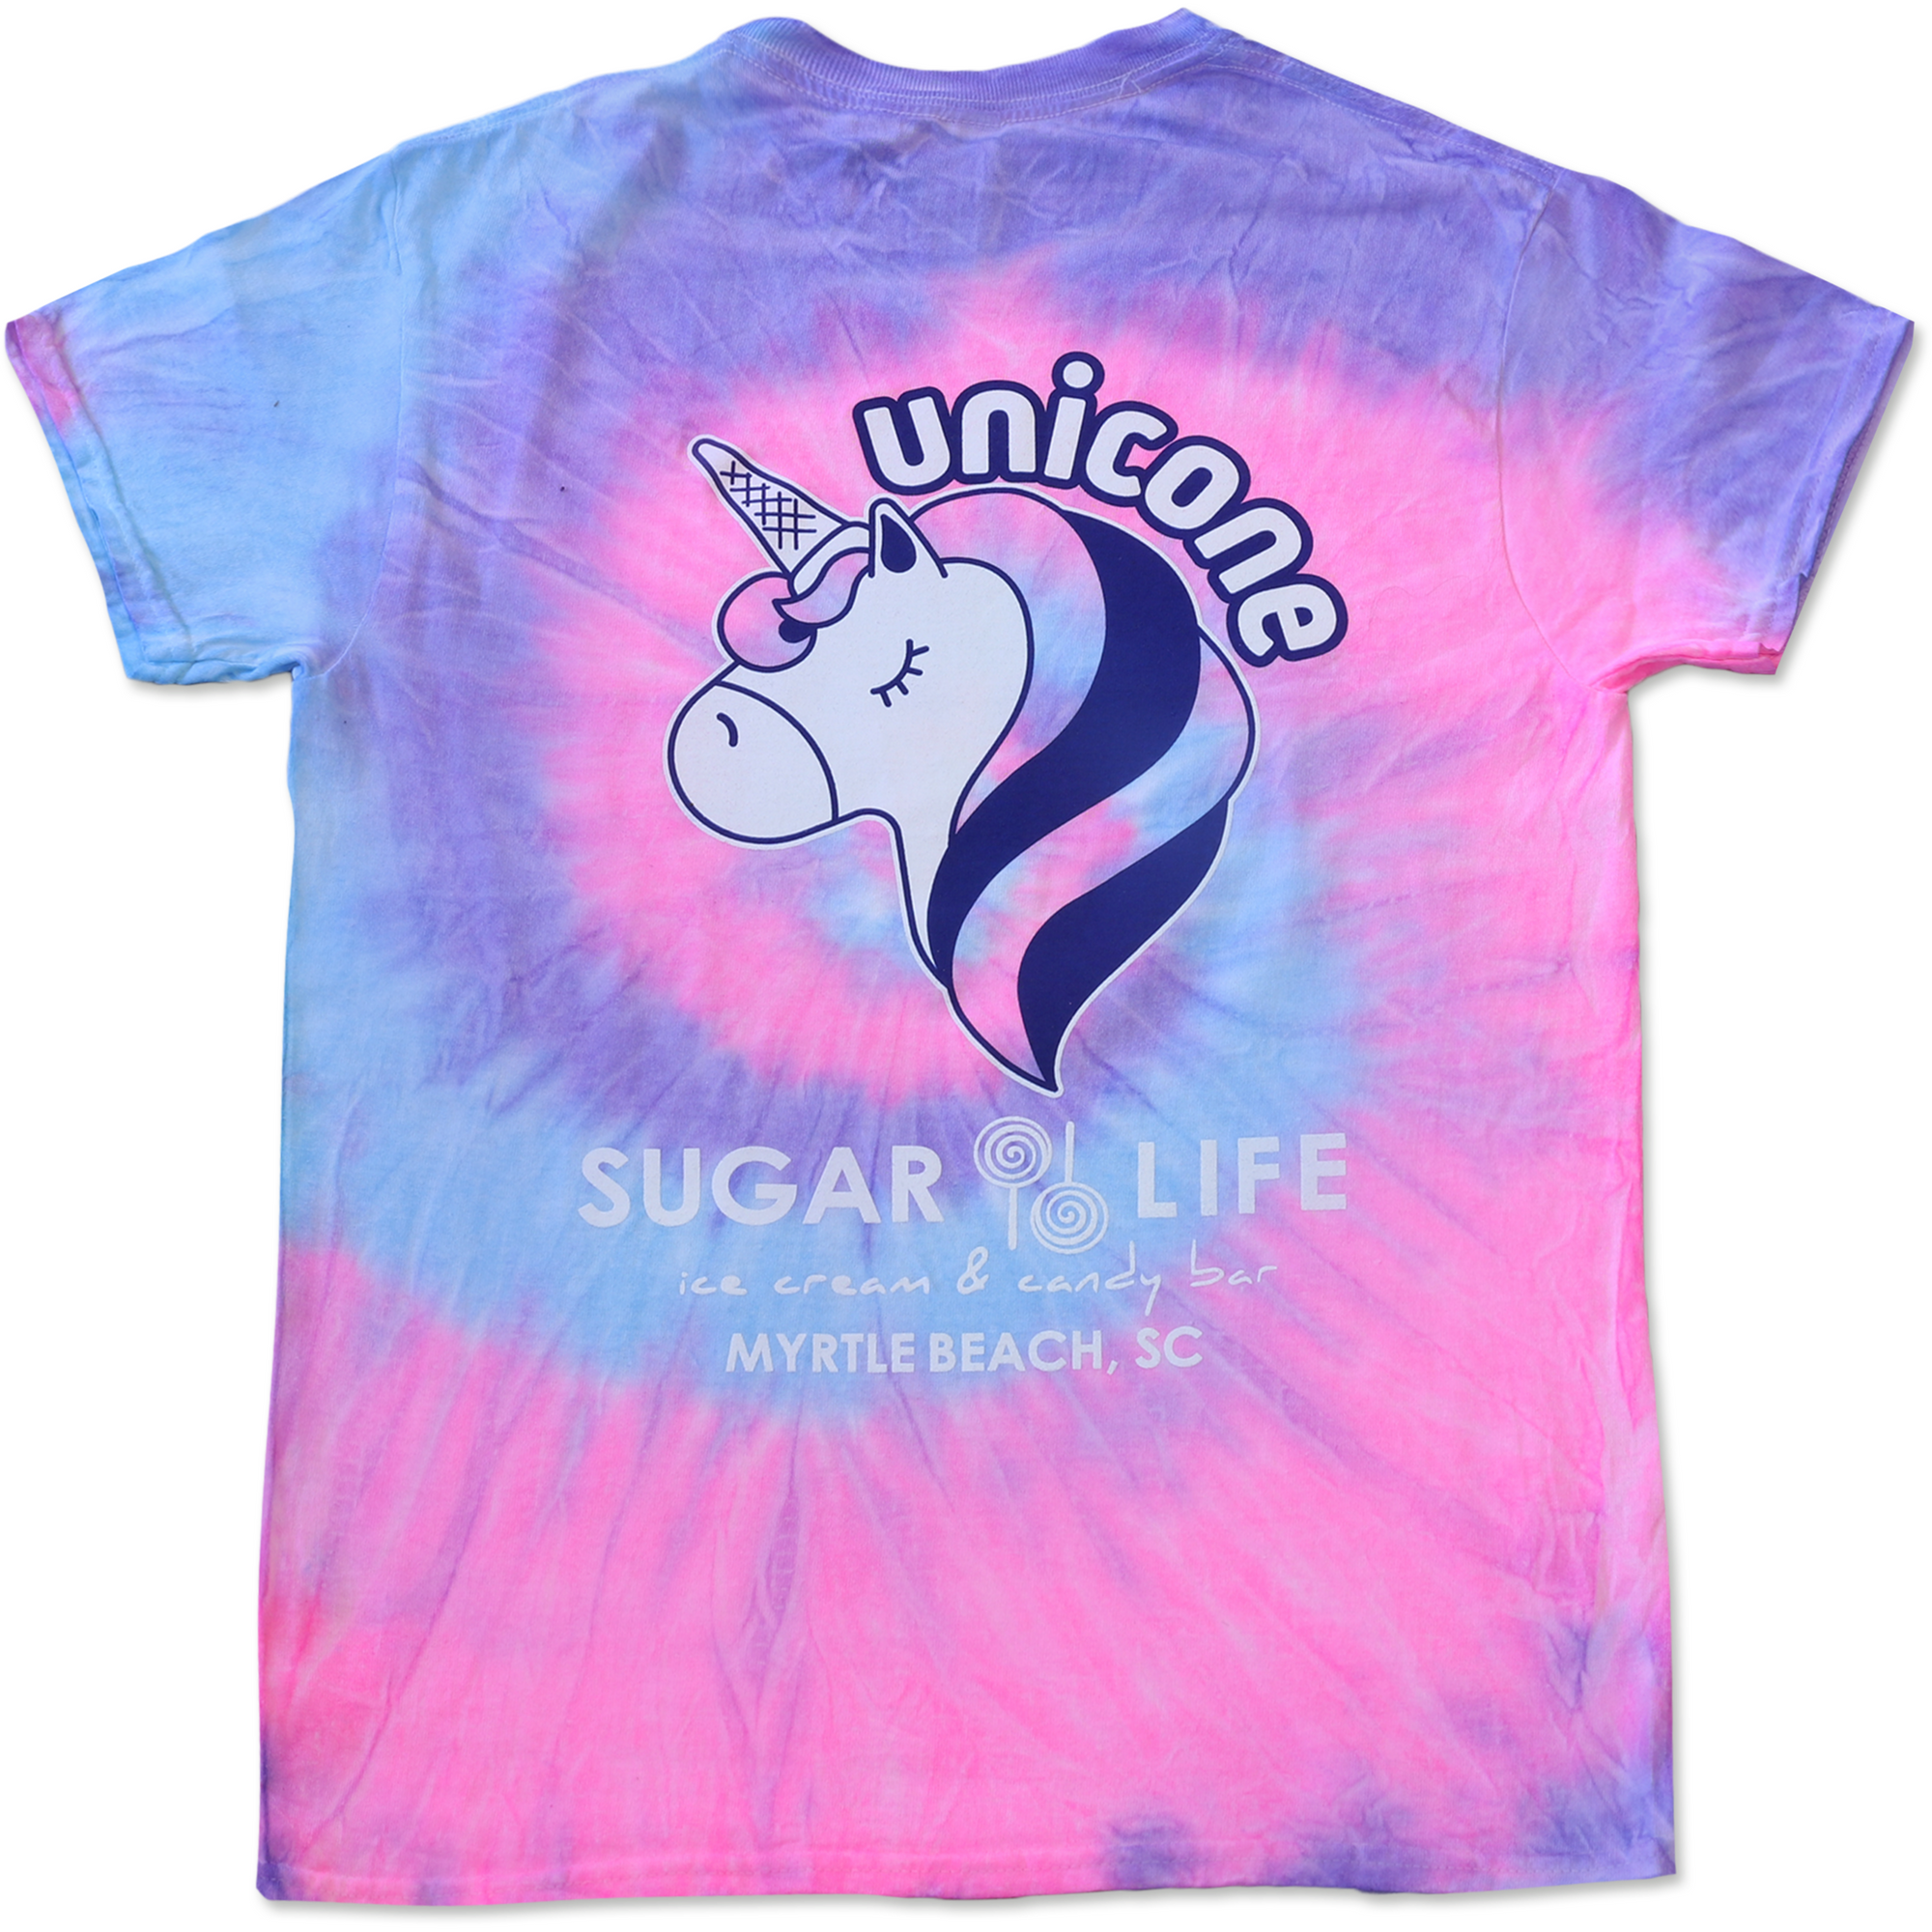 Sugar Life Unicone T-Shirt - Pink Jelly Donut Tie Dye